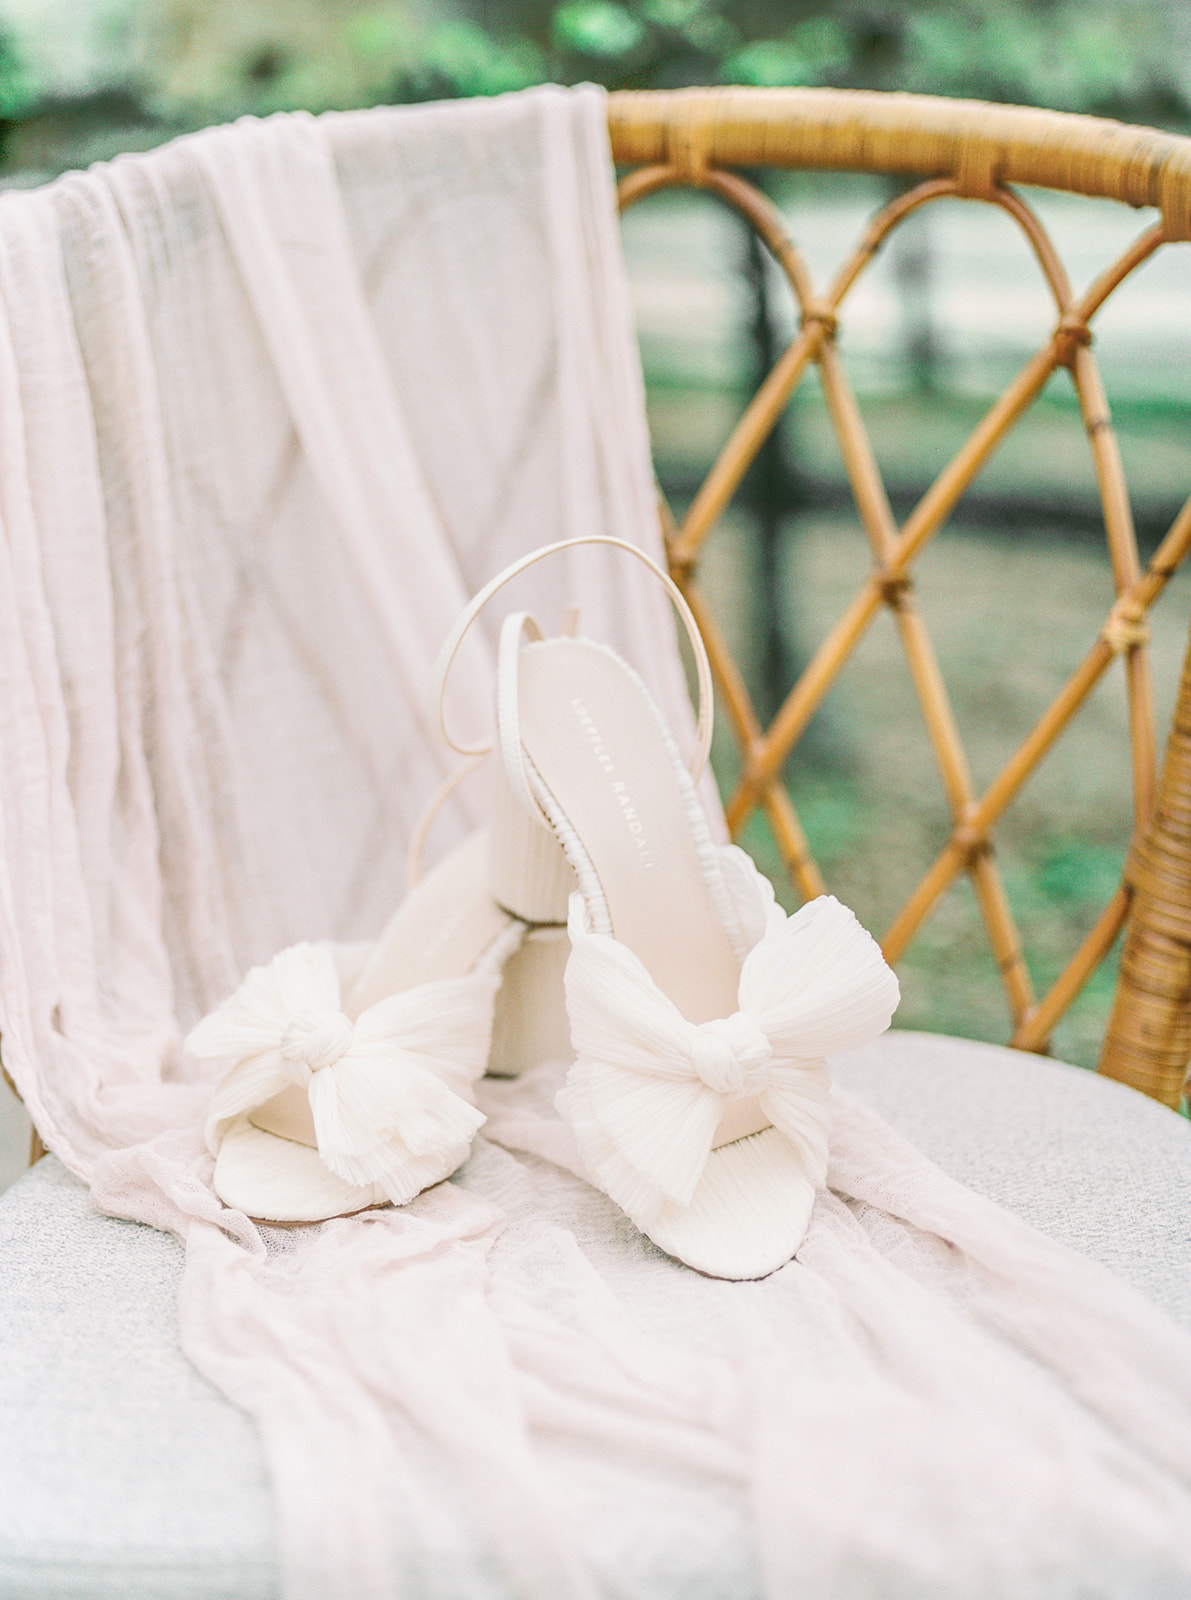 Bridal heels on a vintage chair, Sunstone Winery wedding, captured by Southern California's Tiffany Longeway.